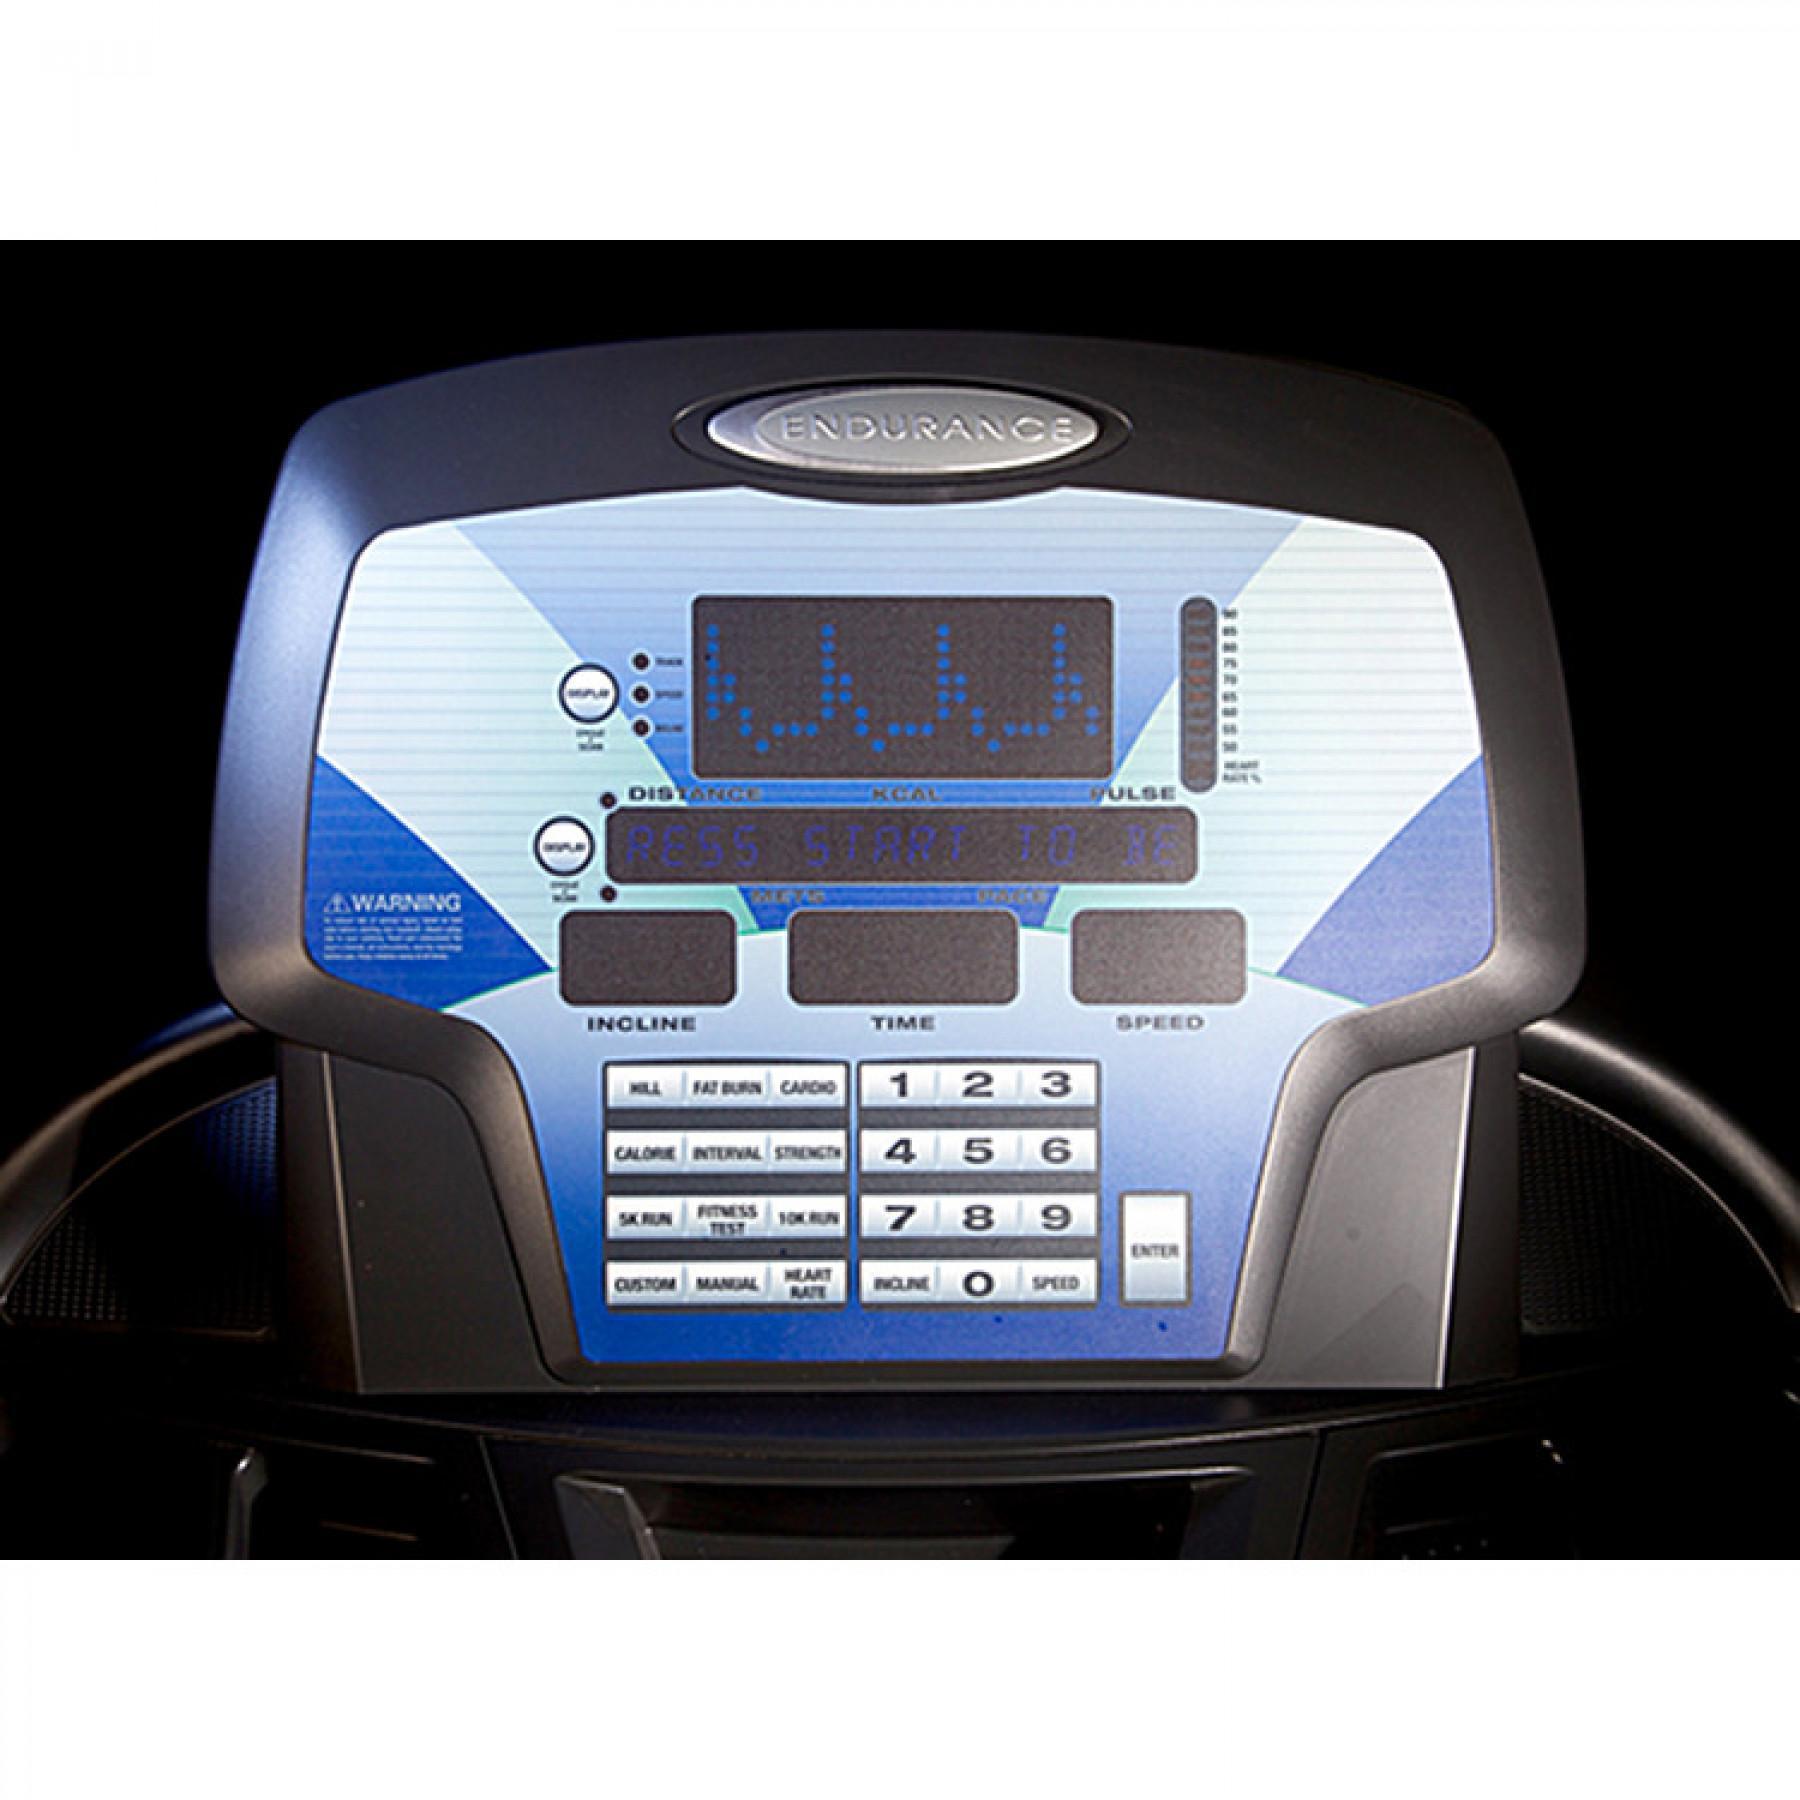 Treadmill Endurance T100 Treadmill Endurance